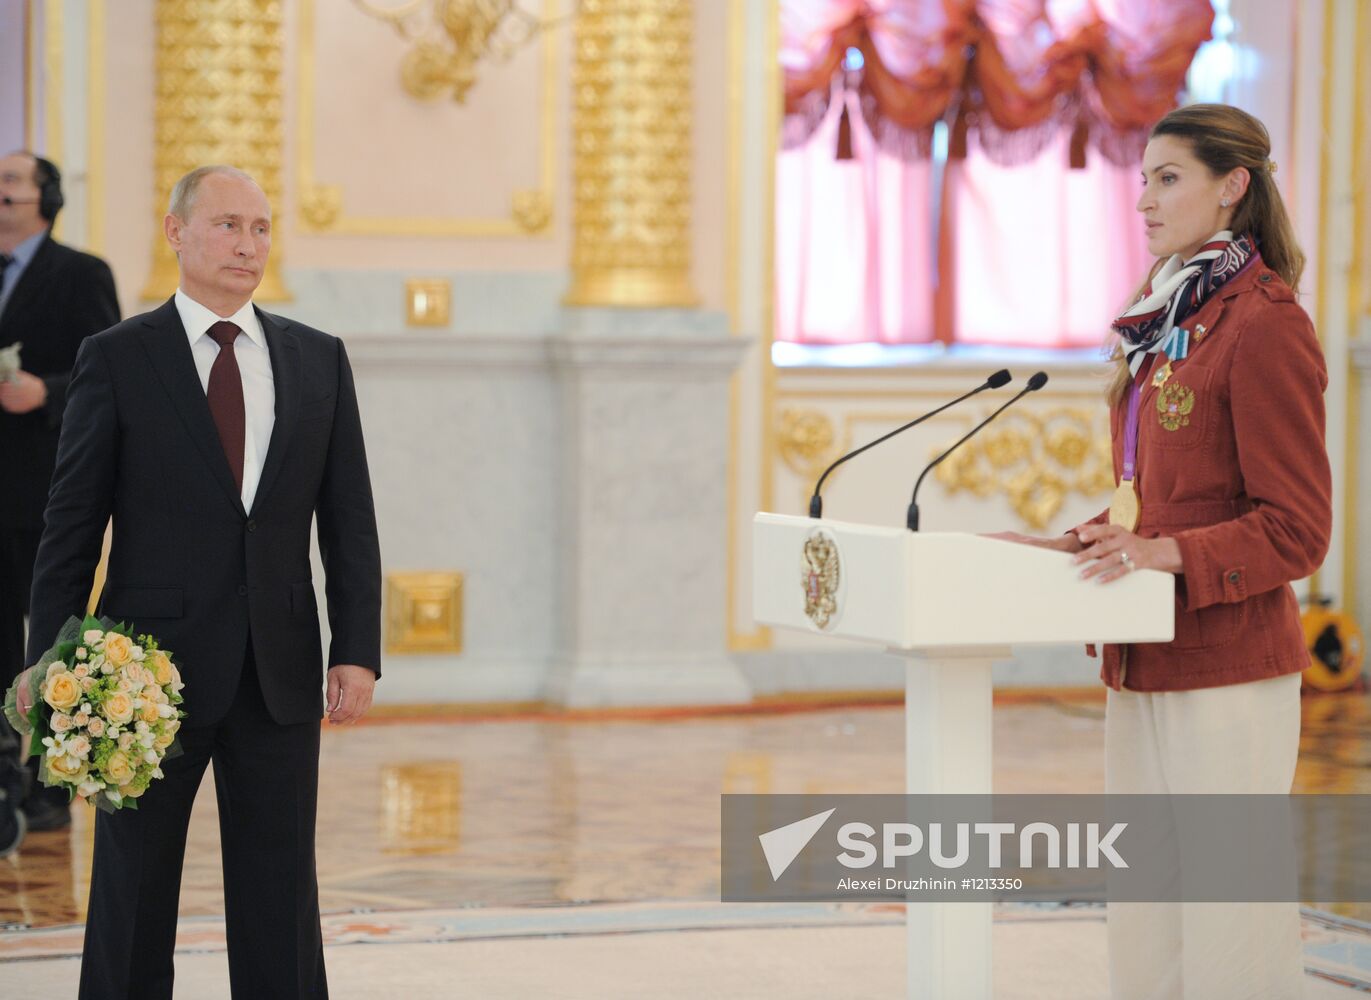 Vladimir Putin presents state awards to Russian Olympic athletes